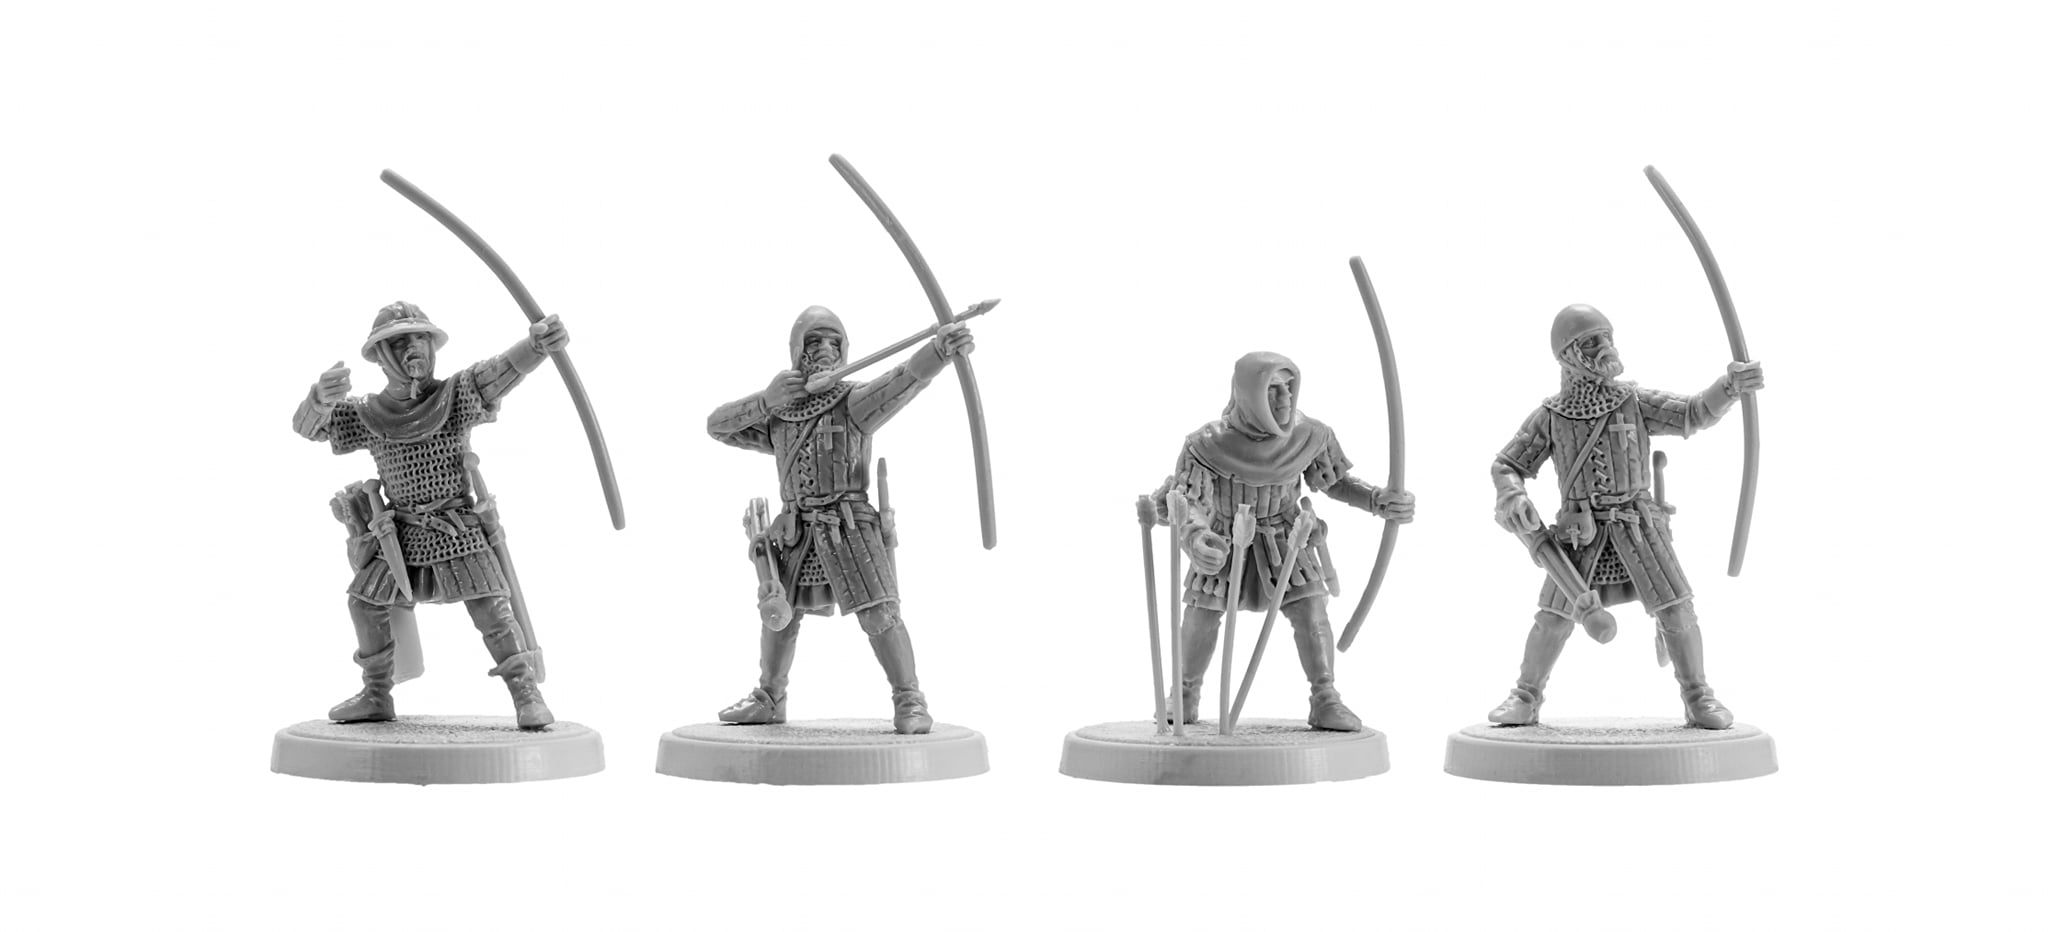 English Archers #1 - V&V Miniatures